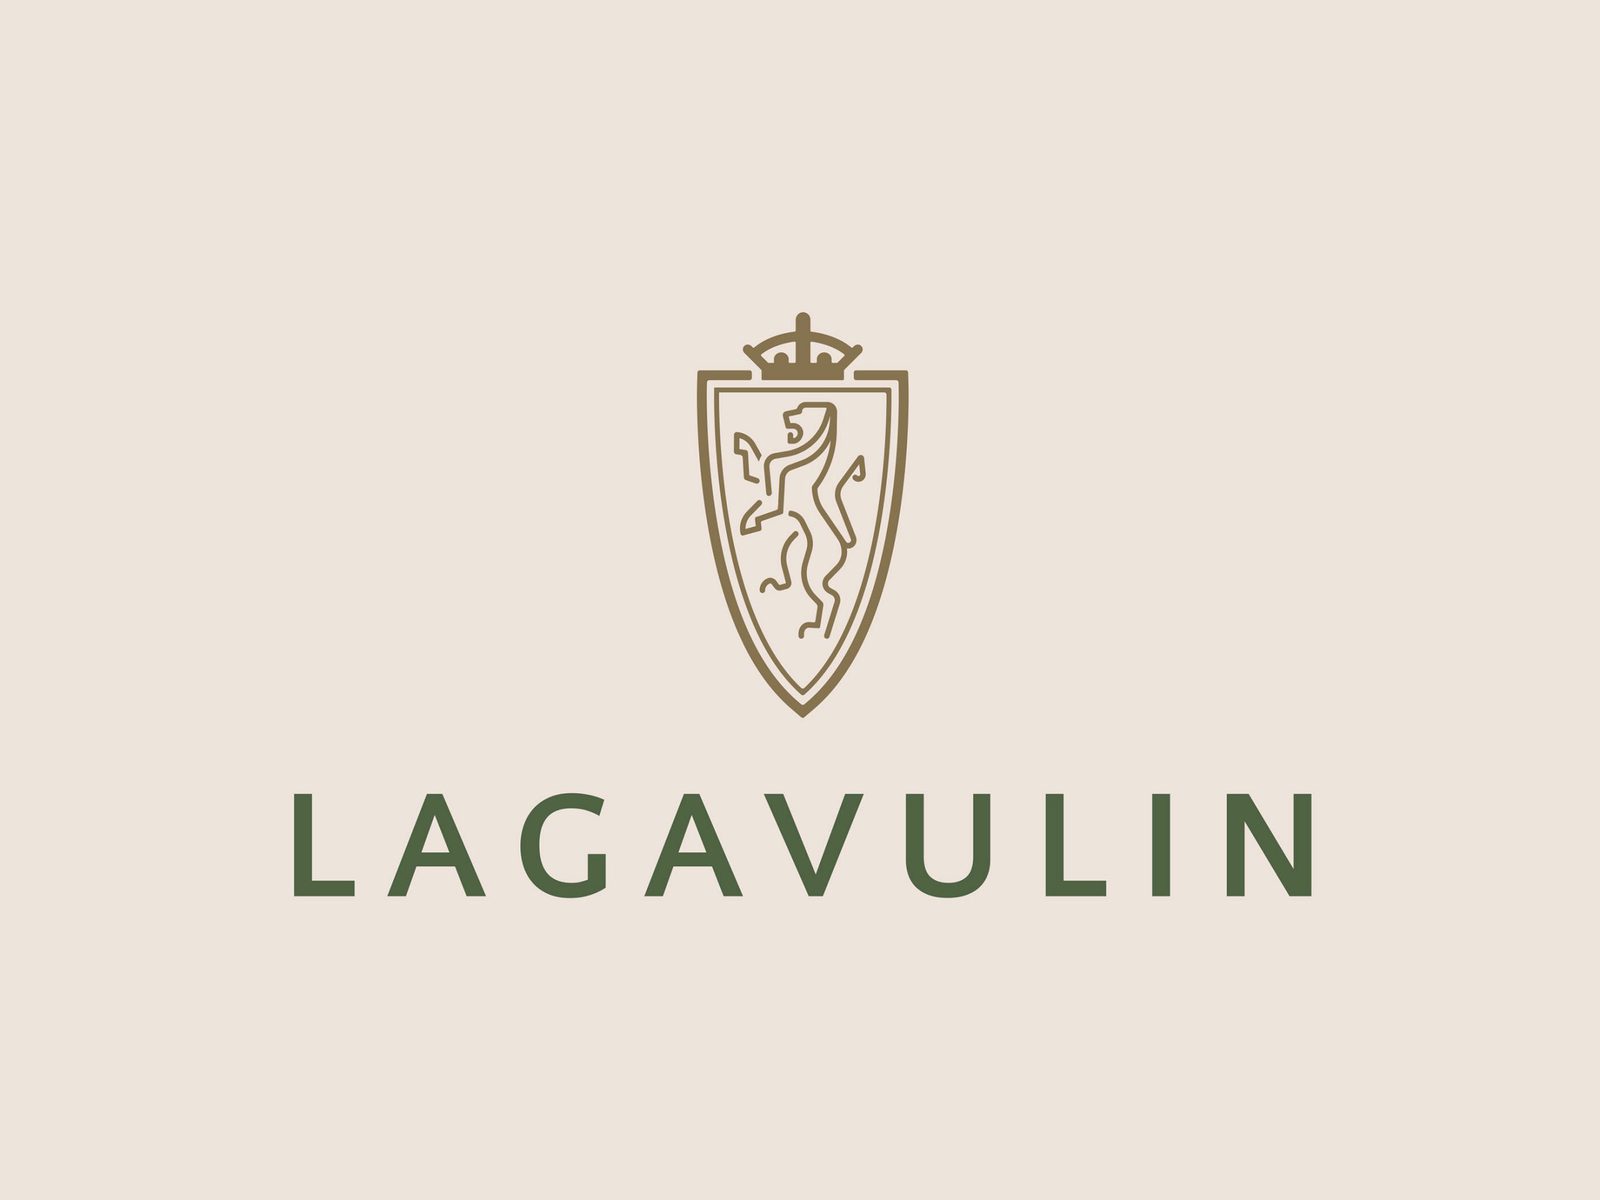 Lagavulin is best Scotch brands